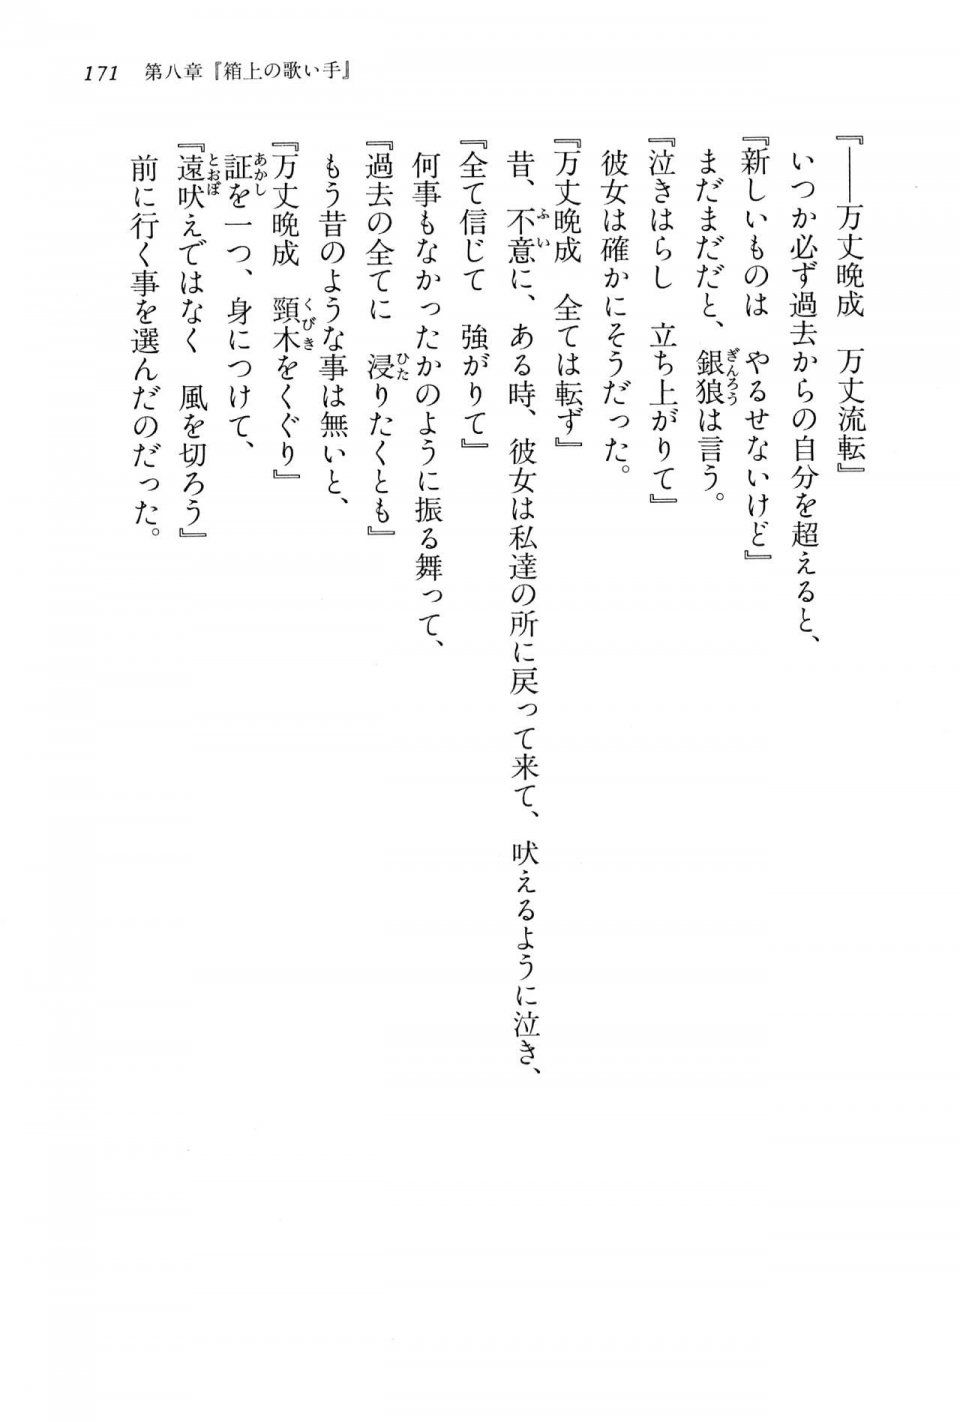 Kyoukai Senjou no Horizon BD Special Mininovel Vol 2(1B) - Photo #175